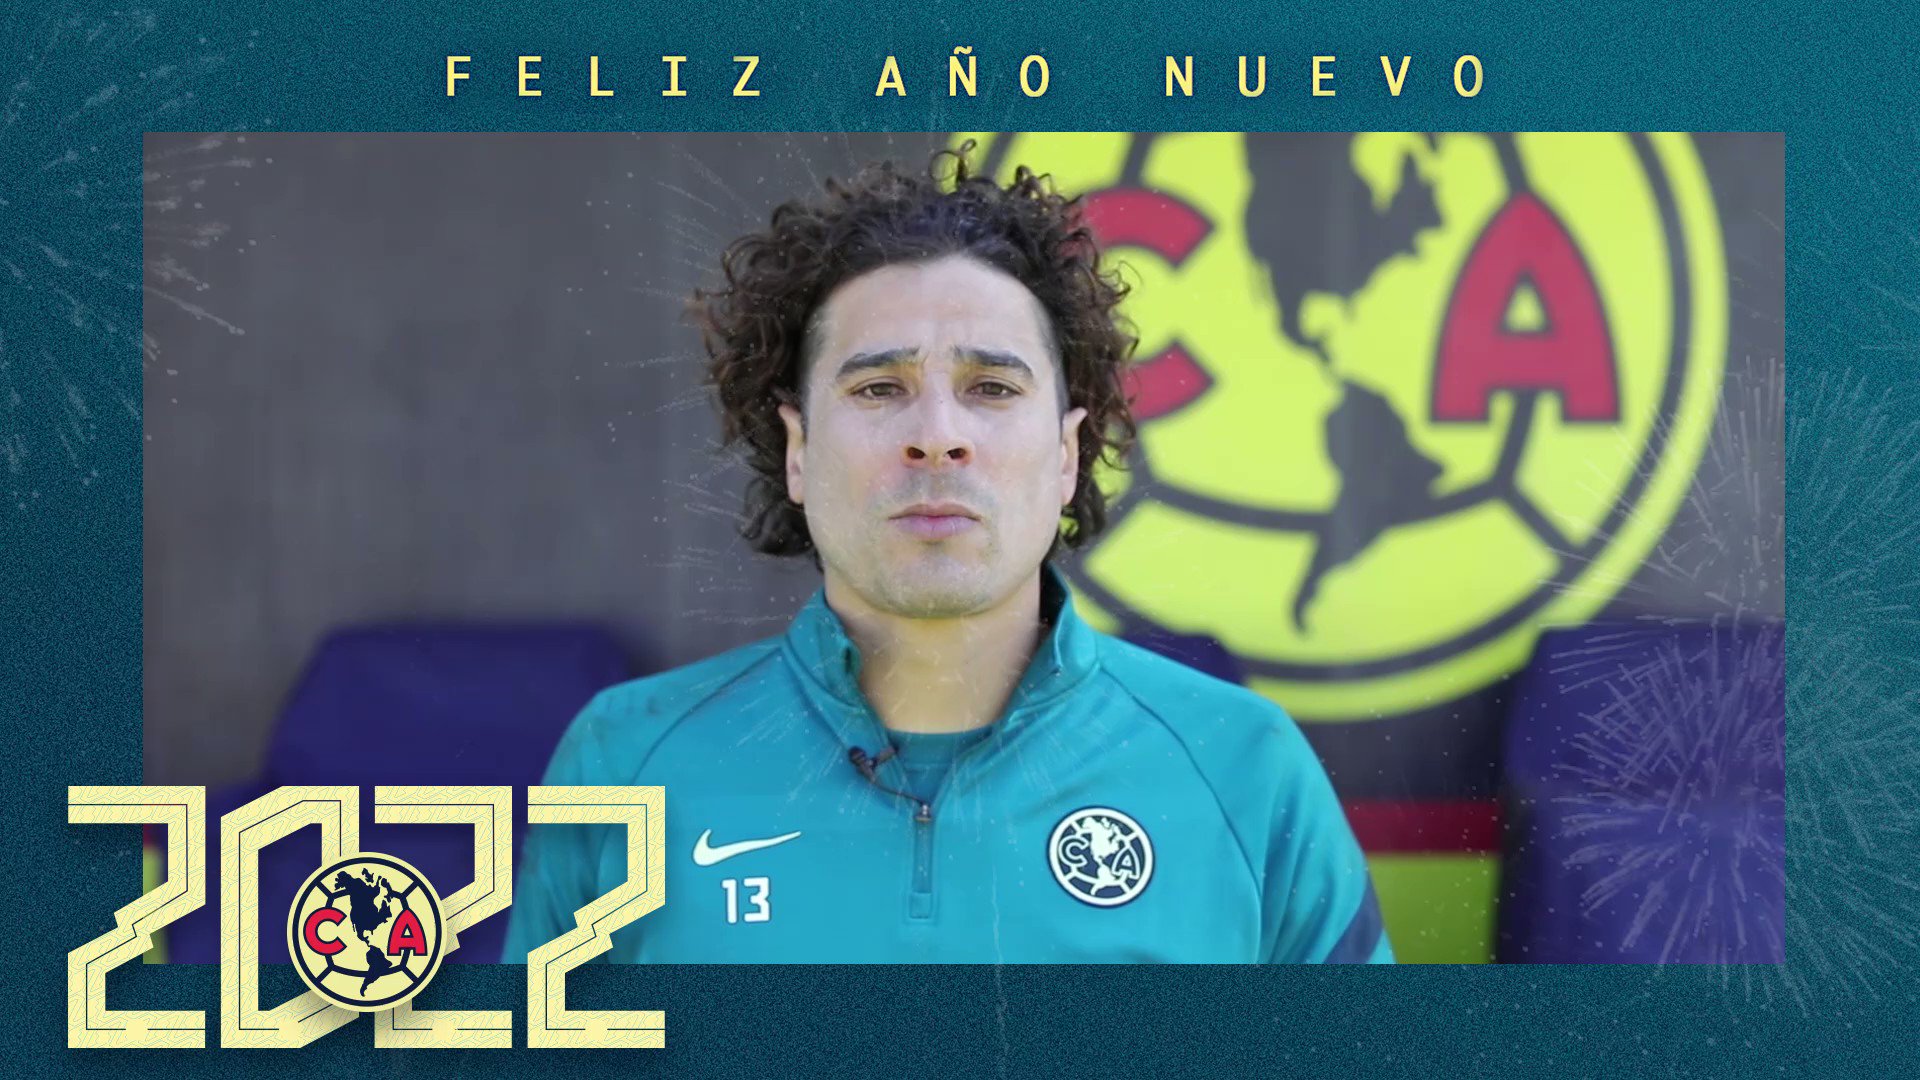 Club América on X: Bienvenidos al Nido 🦅🔥 #FreeFireAmerica / X